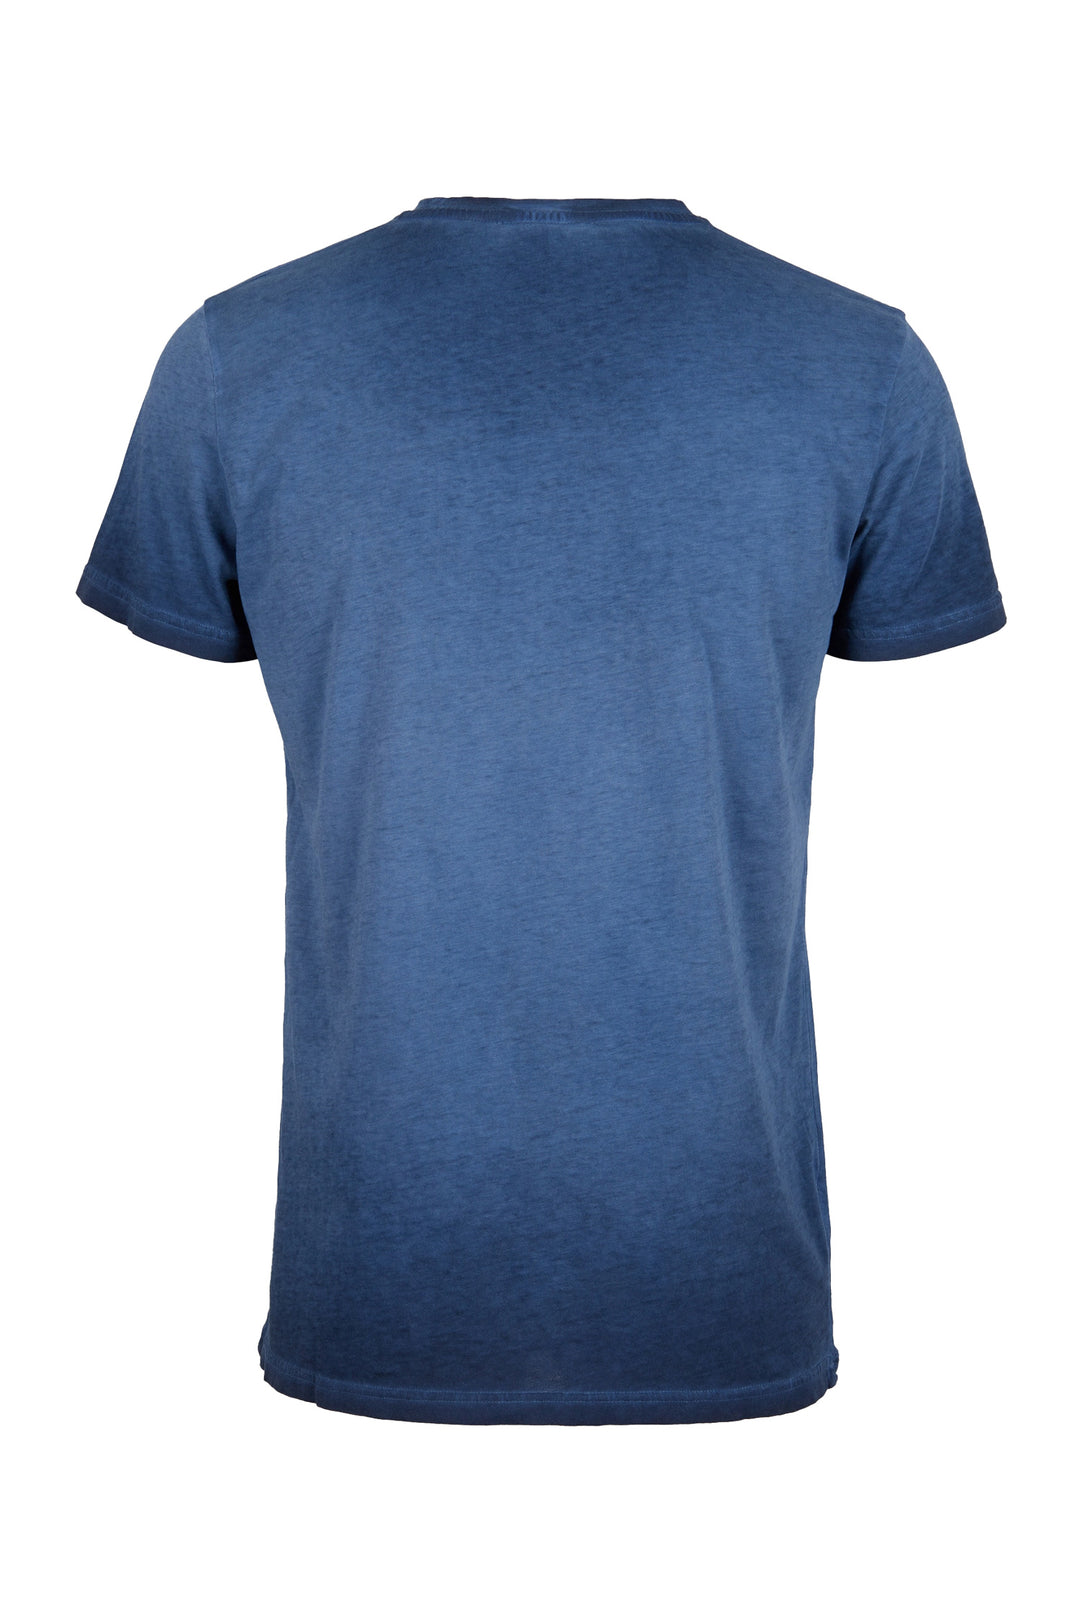 GALLO T-shirt cotone blu tinta unita - Mancinelli 1954